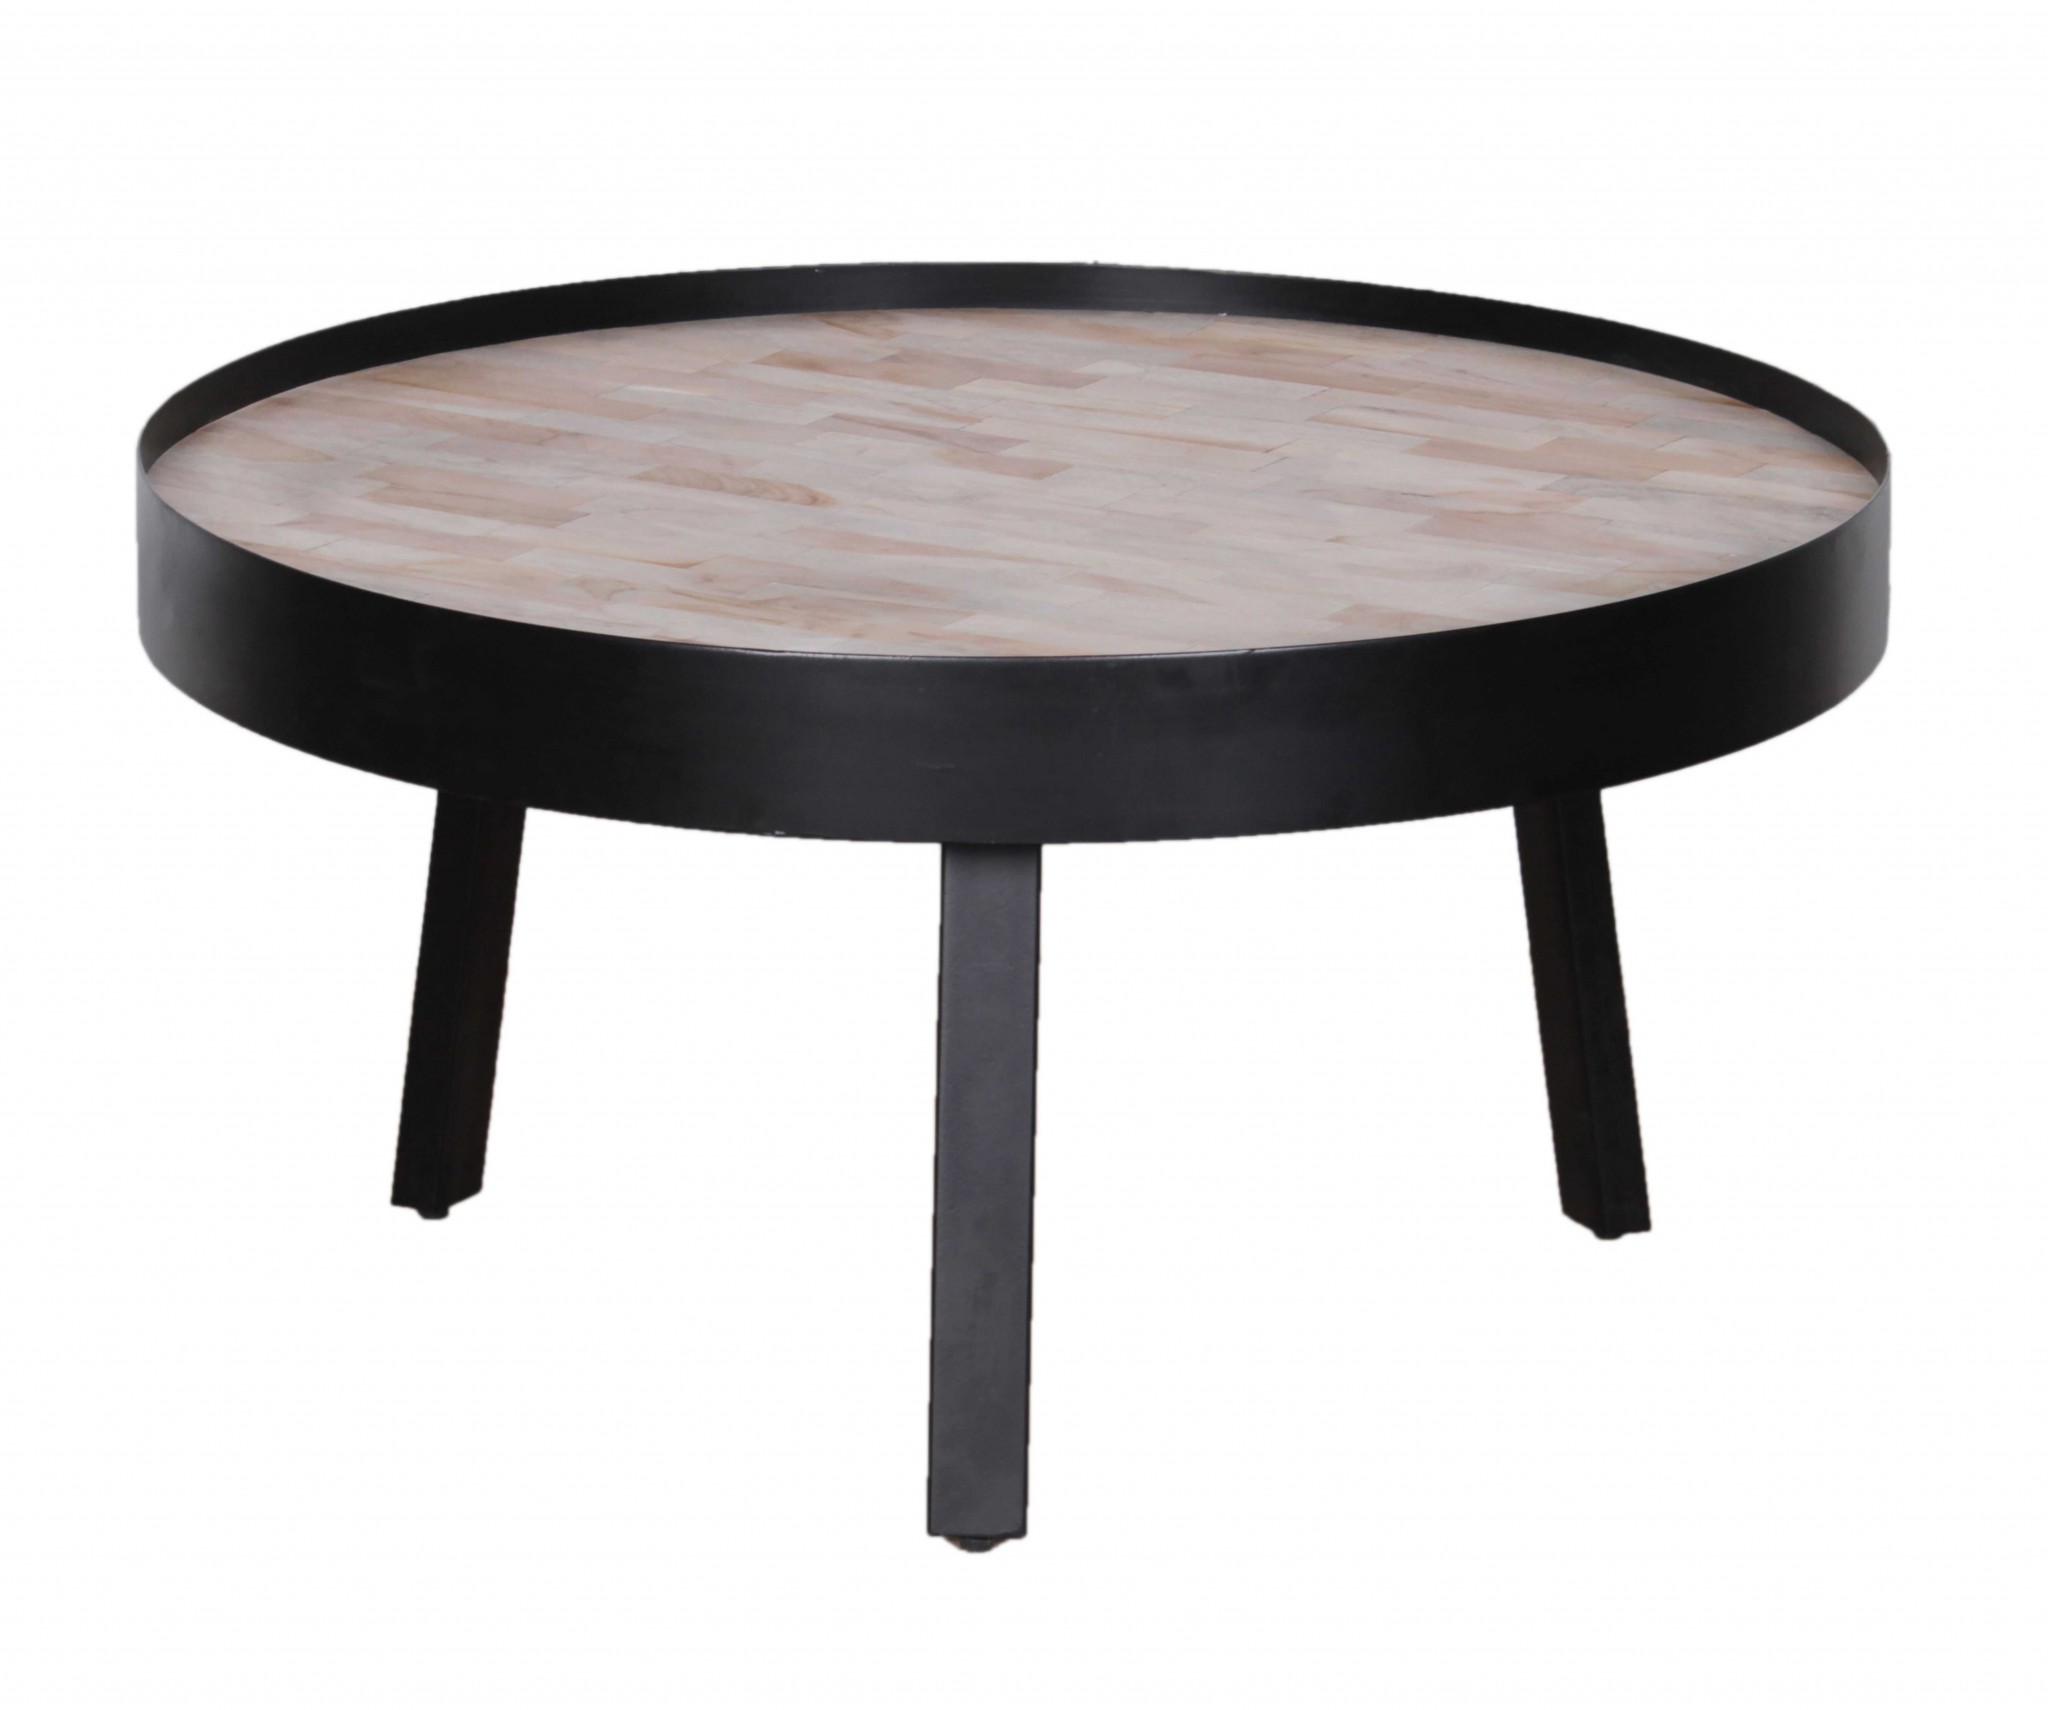 29" X 29" X 15" Multi Wood Metal Round Coffee Table Large